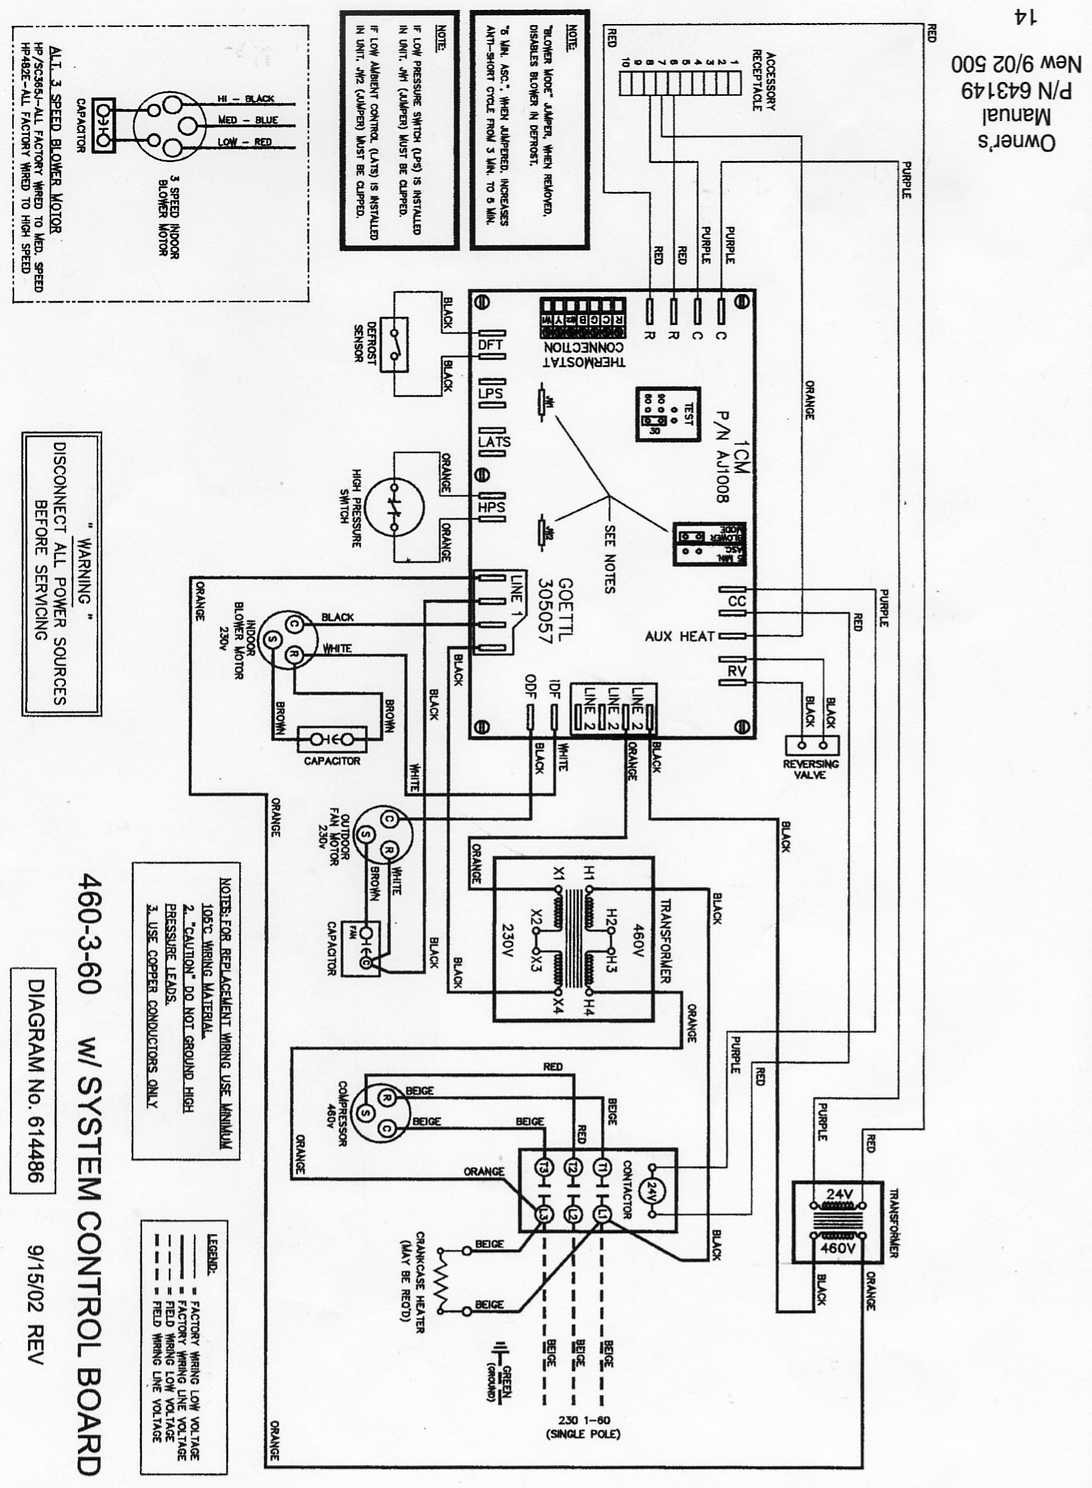 Goodman Heat Pump Wiring Diagram